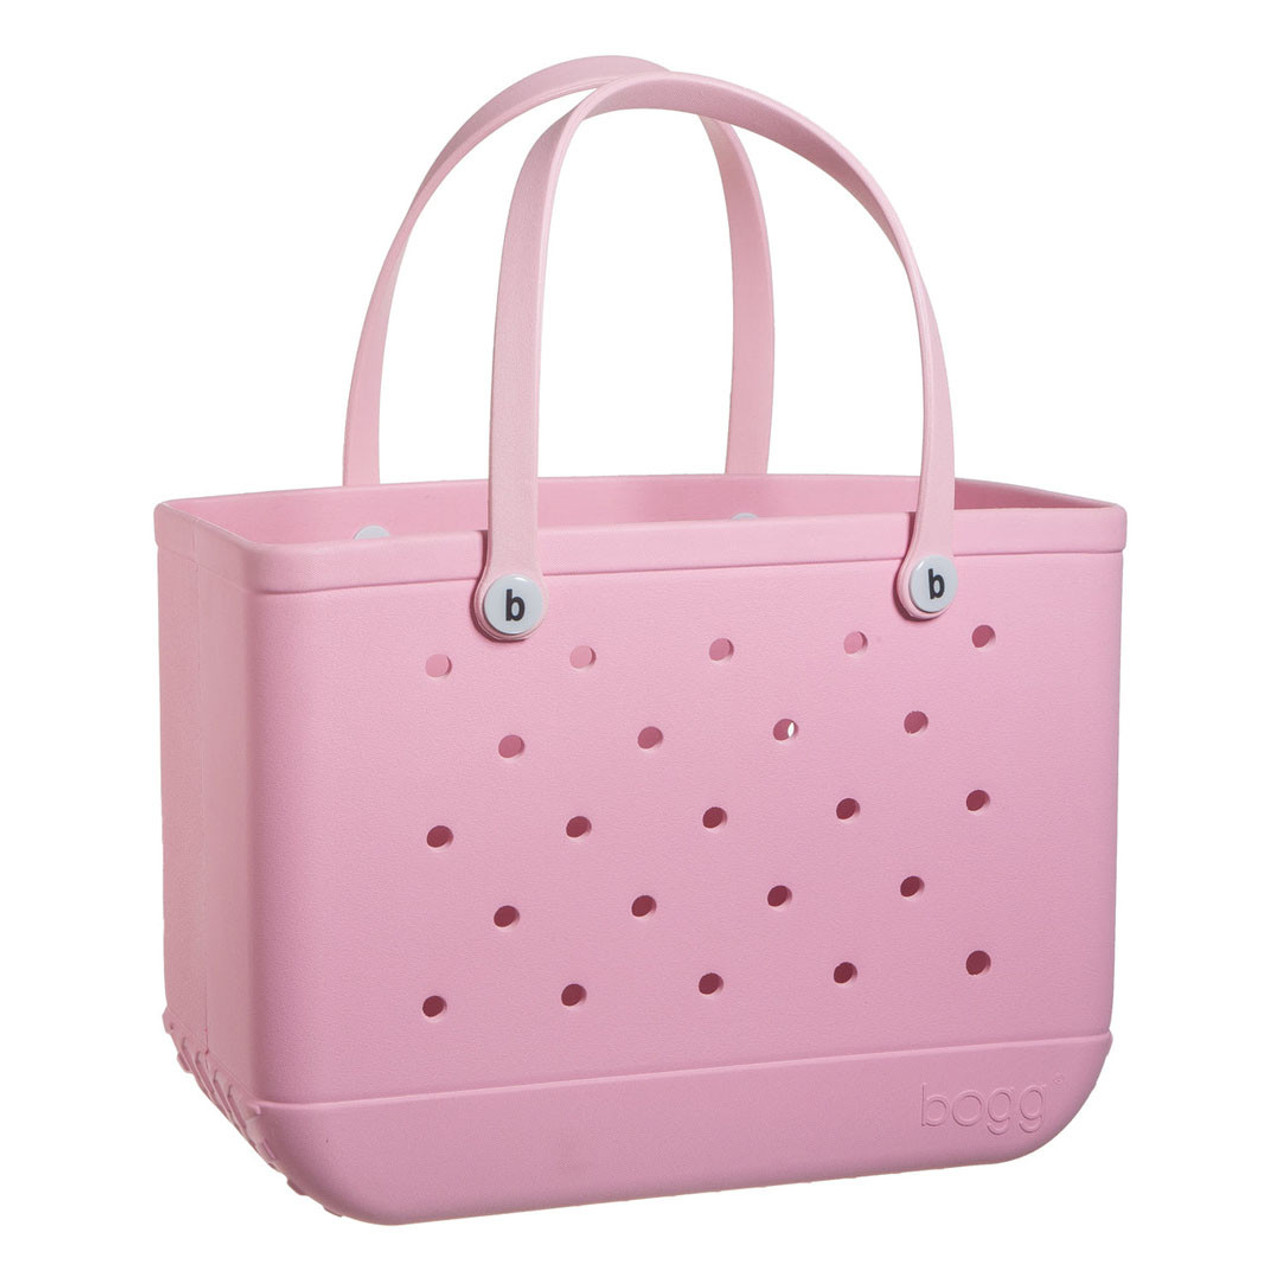 Bogg Bags Original Large Bogg Bag - Bubblegum Pink $ 89.95 | TYLER'S